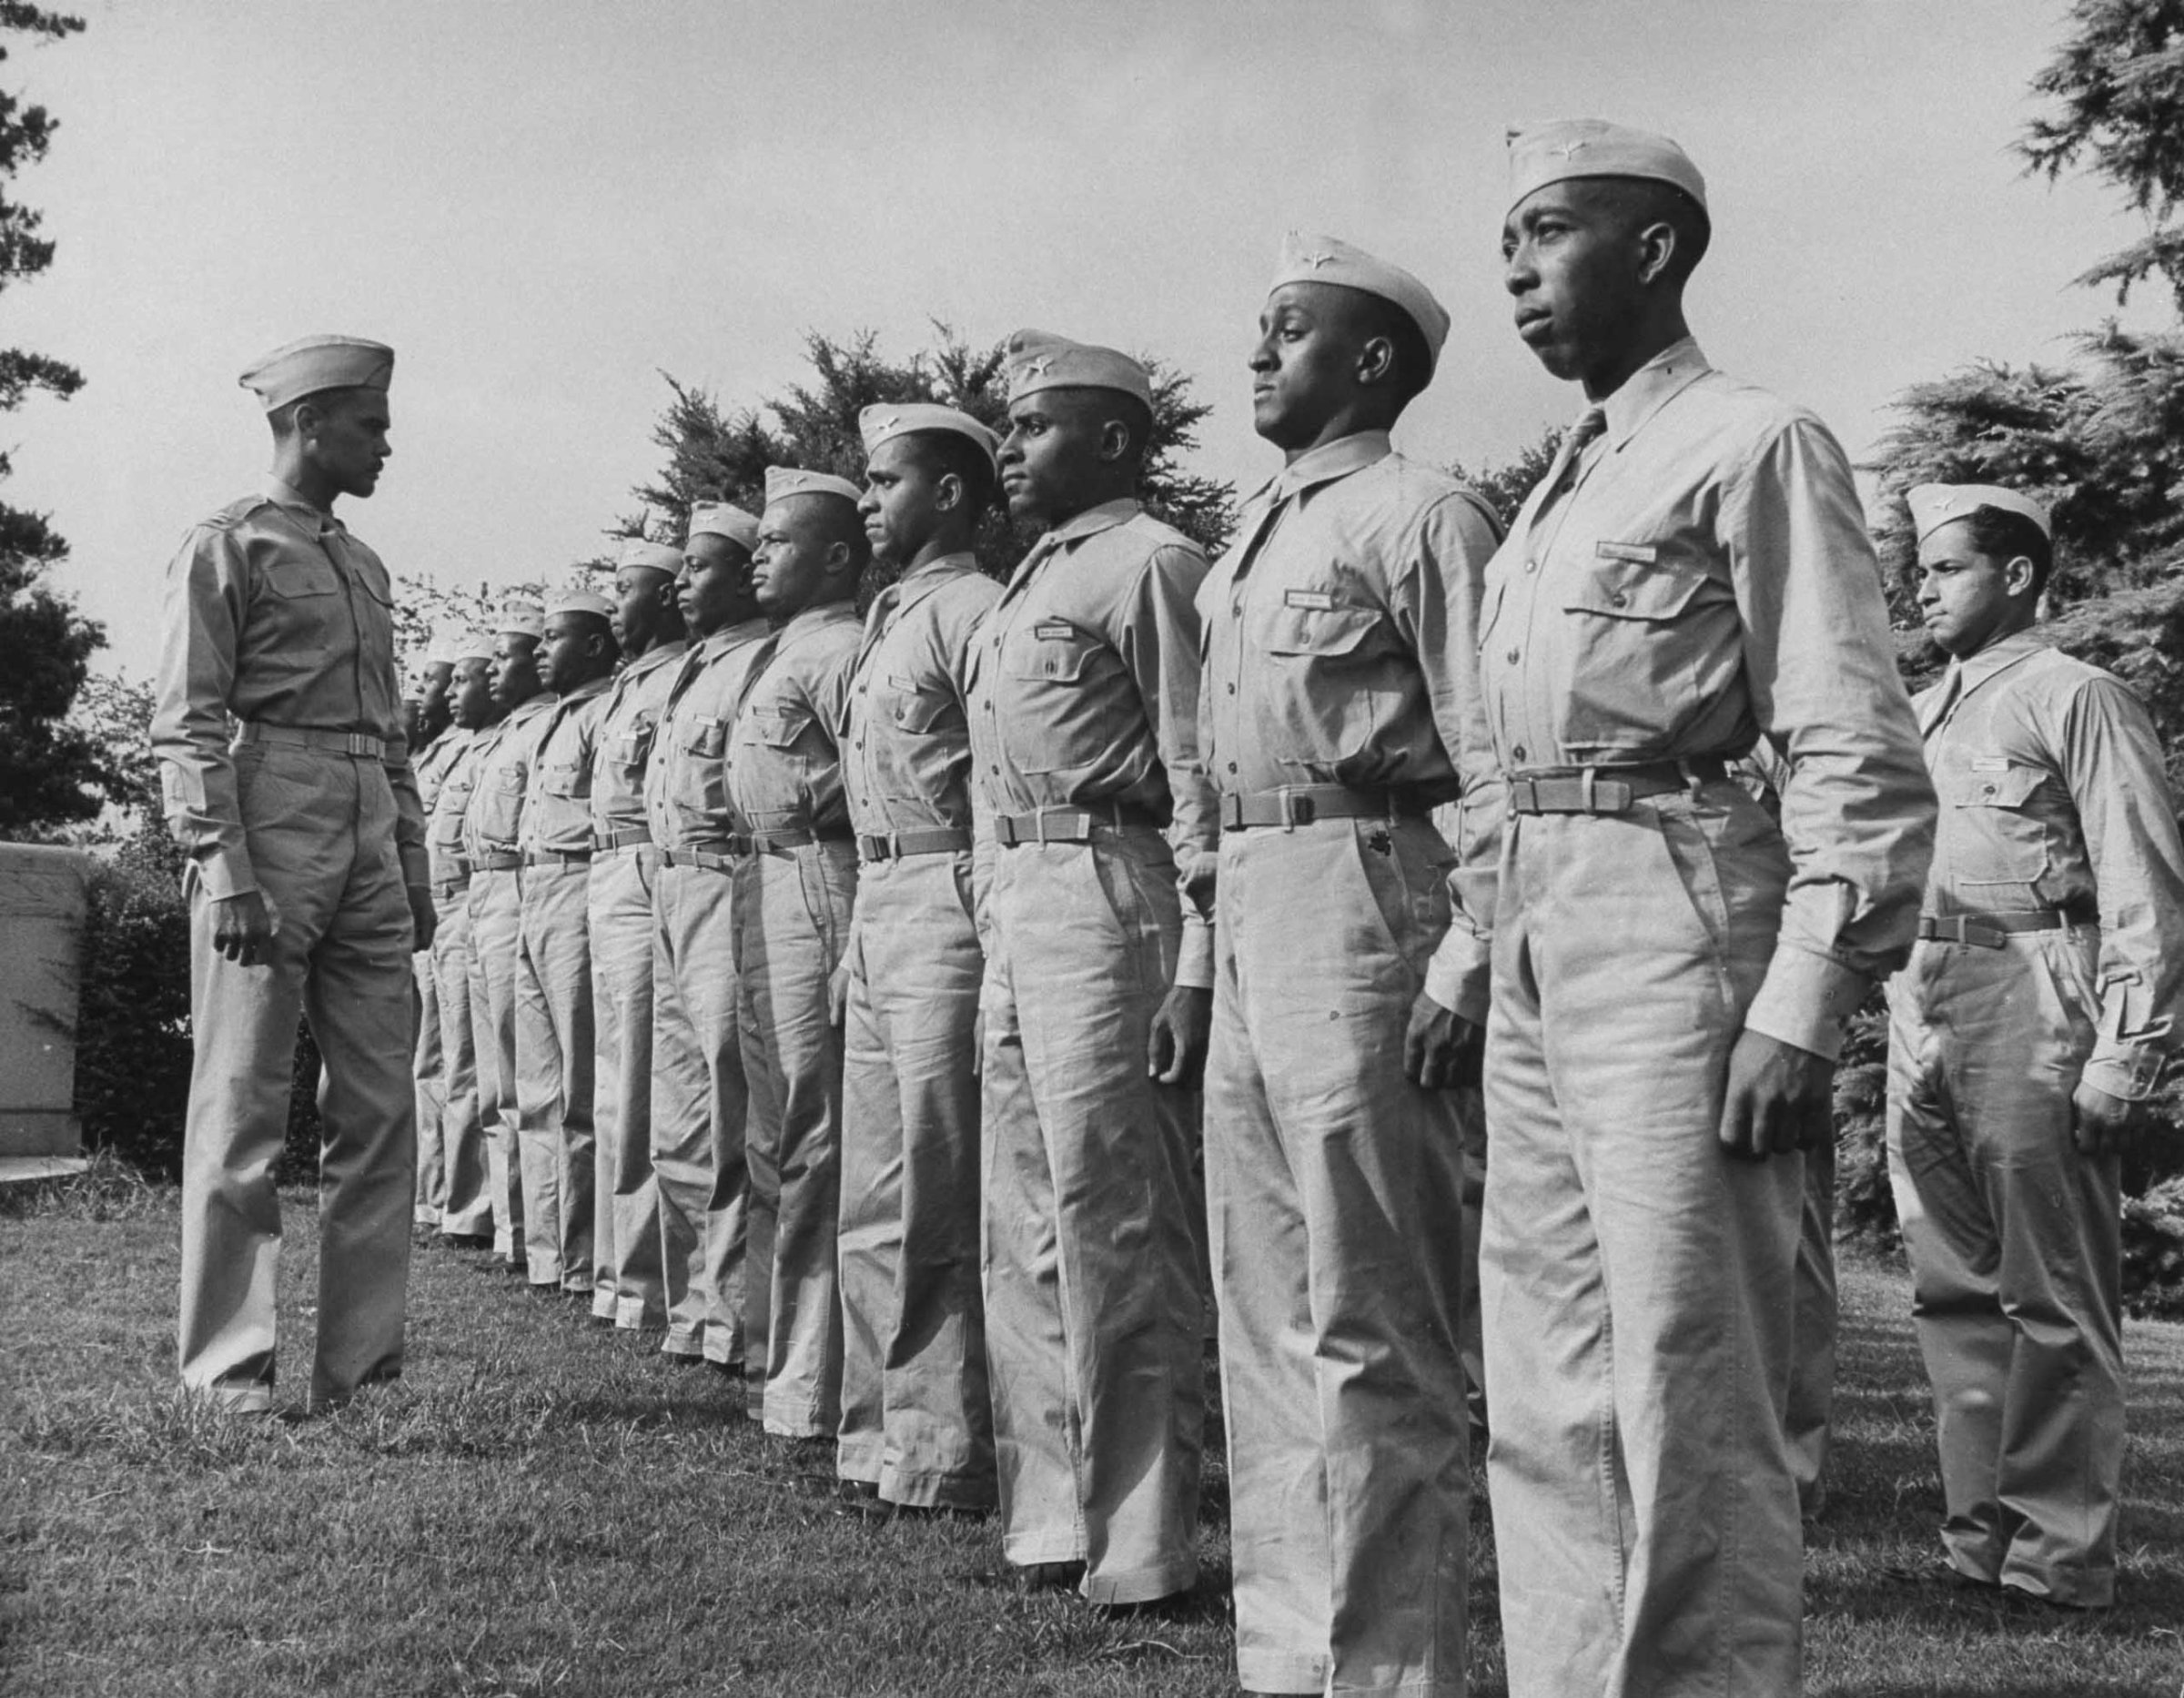 Tuskegee airmen in Alabama in 1942.